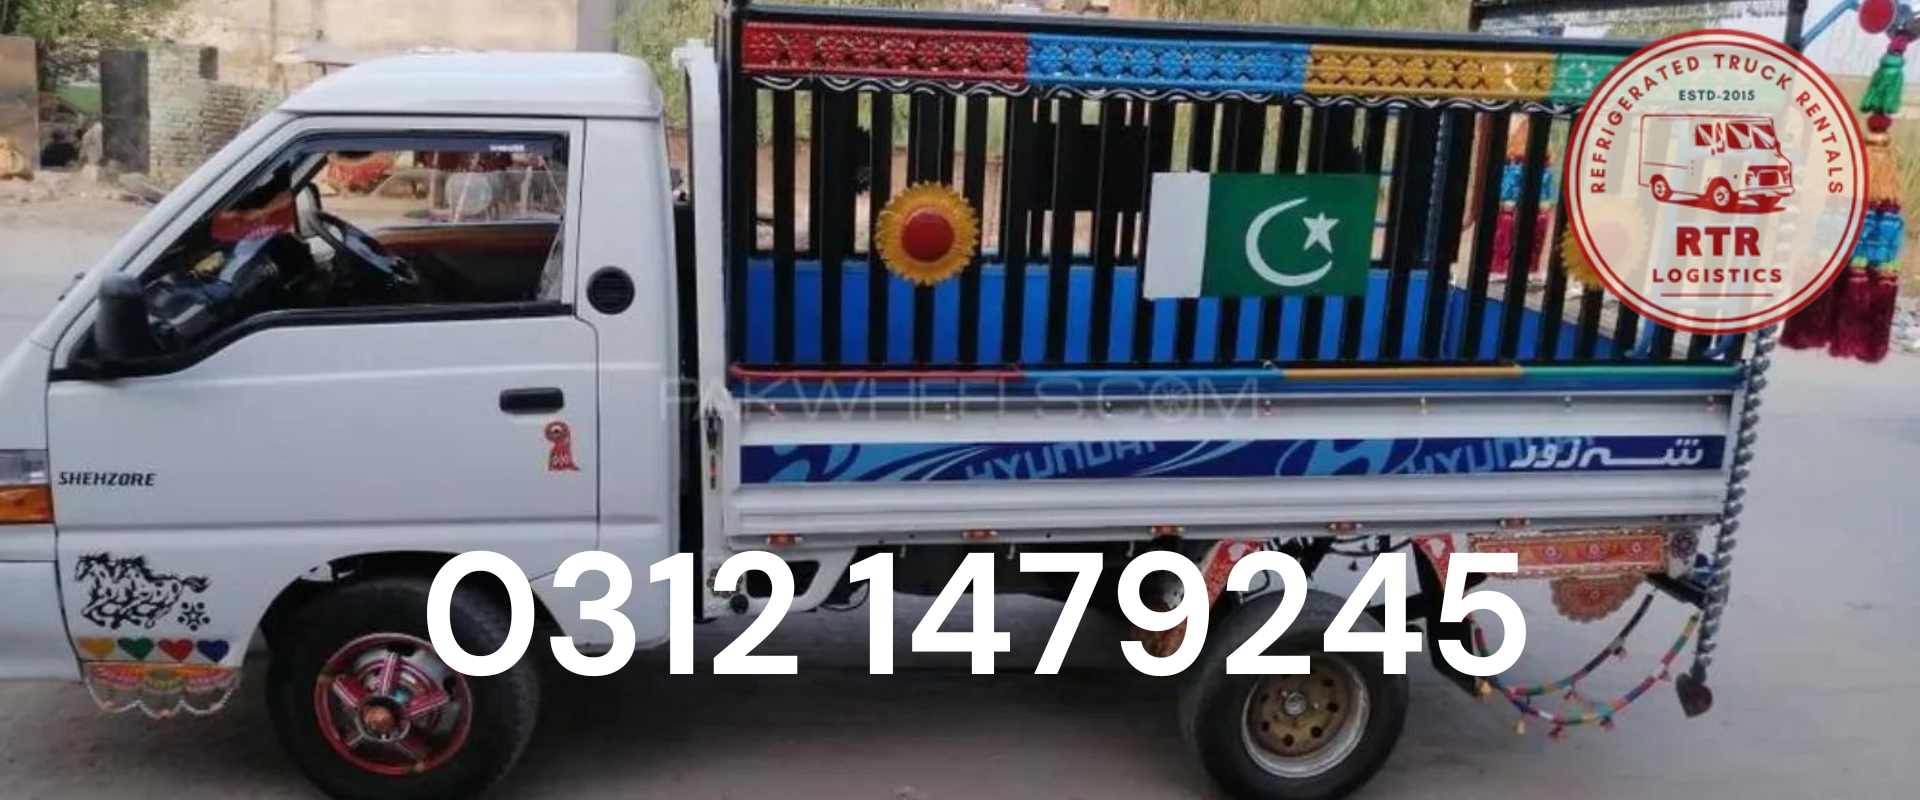 Goods Transportation Services in Pakistan